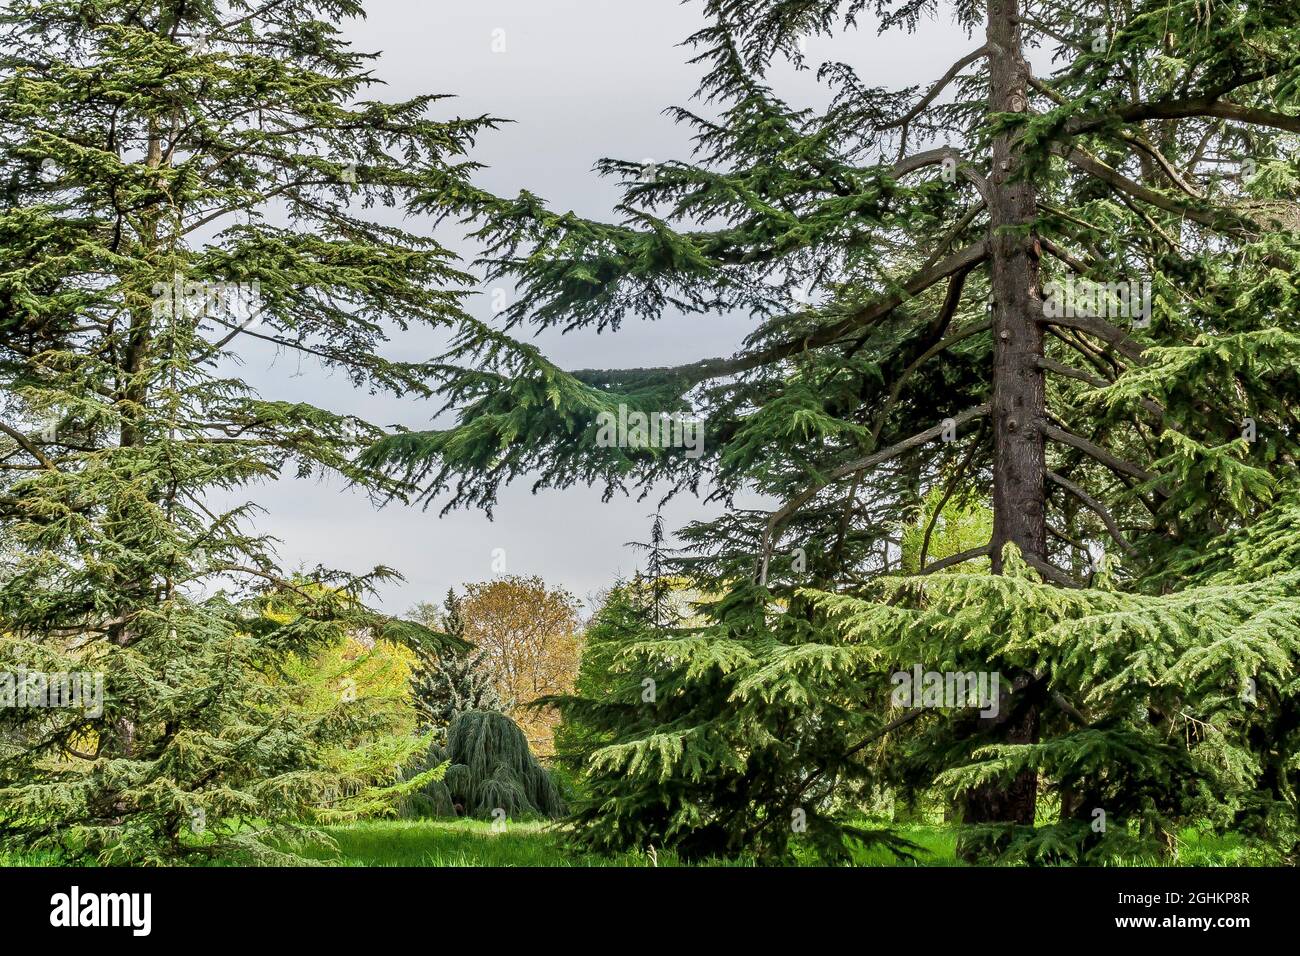 Cedrus libani ssp. atlantica 'Glauca', Larix decidua, Arboretum du Bois de Vincennes, Paris, France Stock Photo